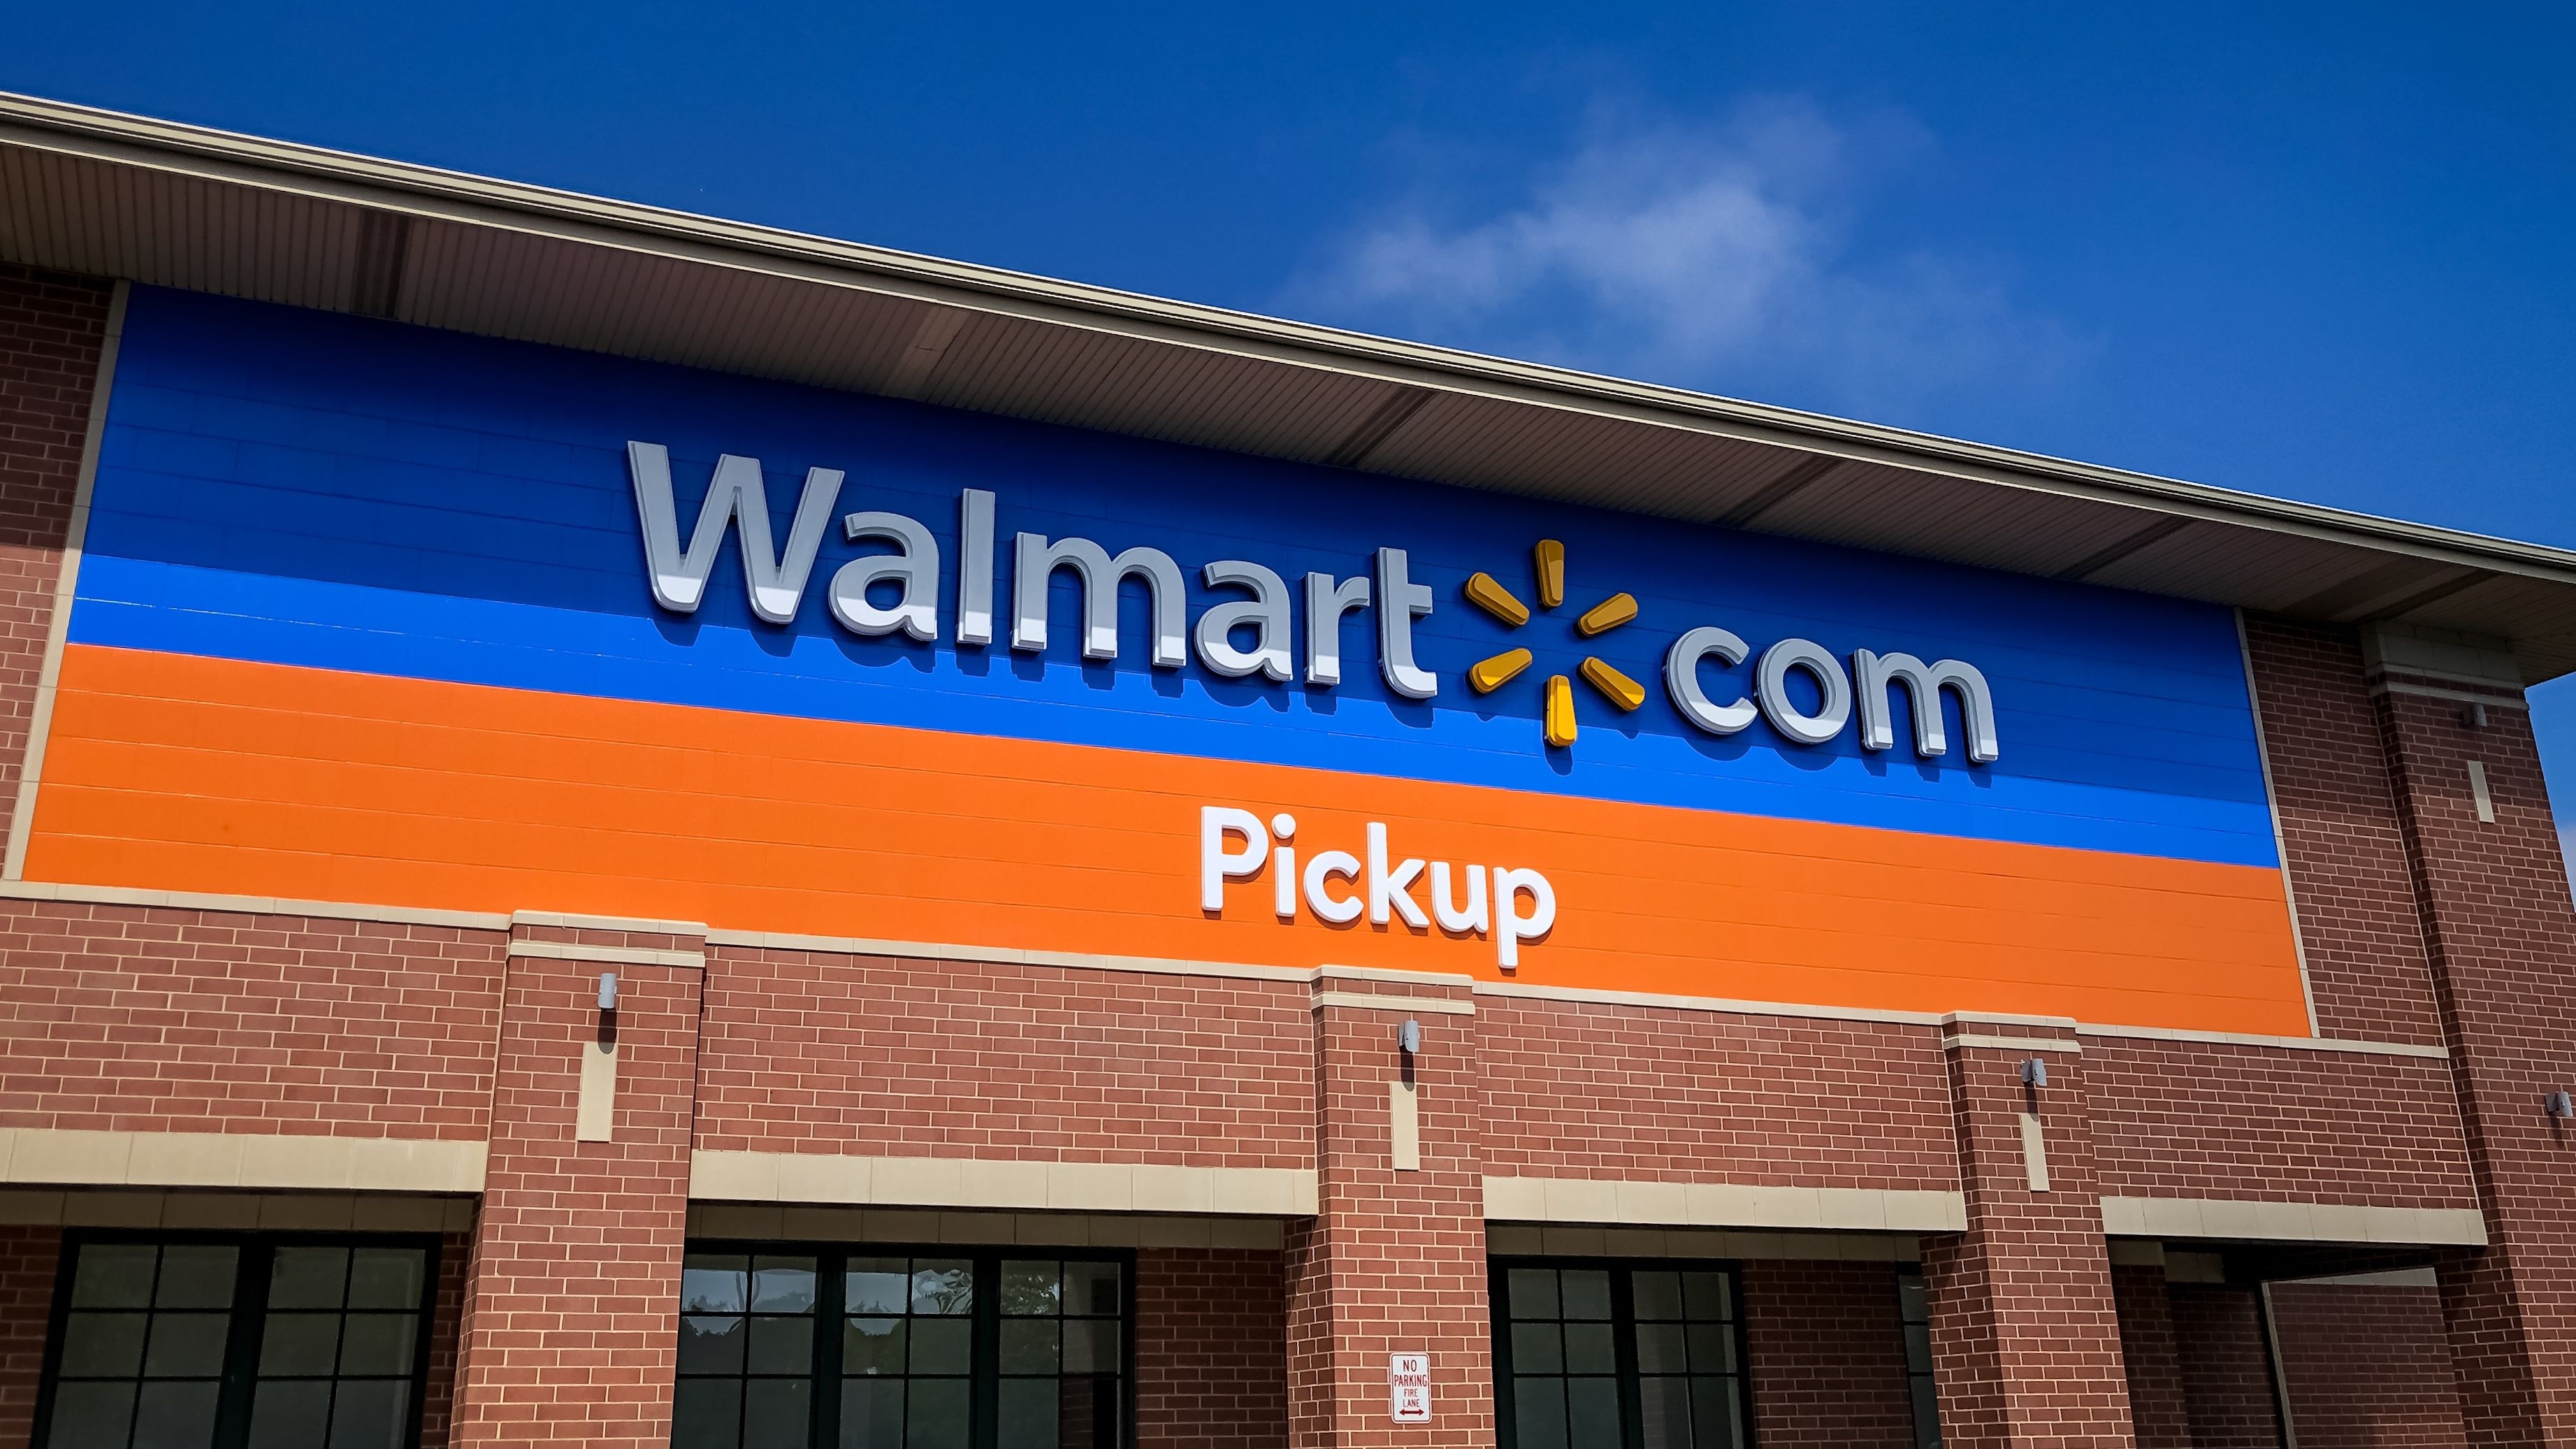 Walmart: Online shopping, Pickup service, E-commerce. 3690x2080 HD Wallpaper.